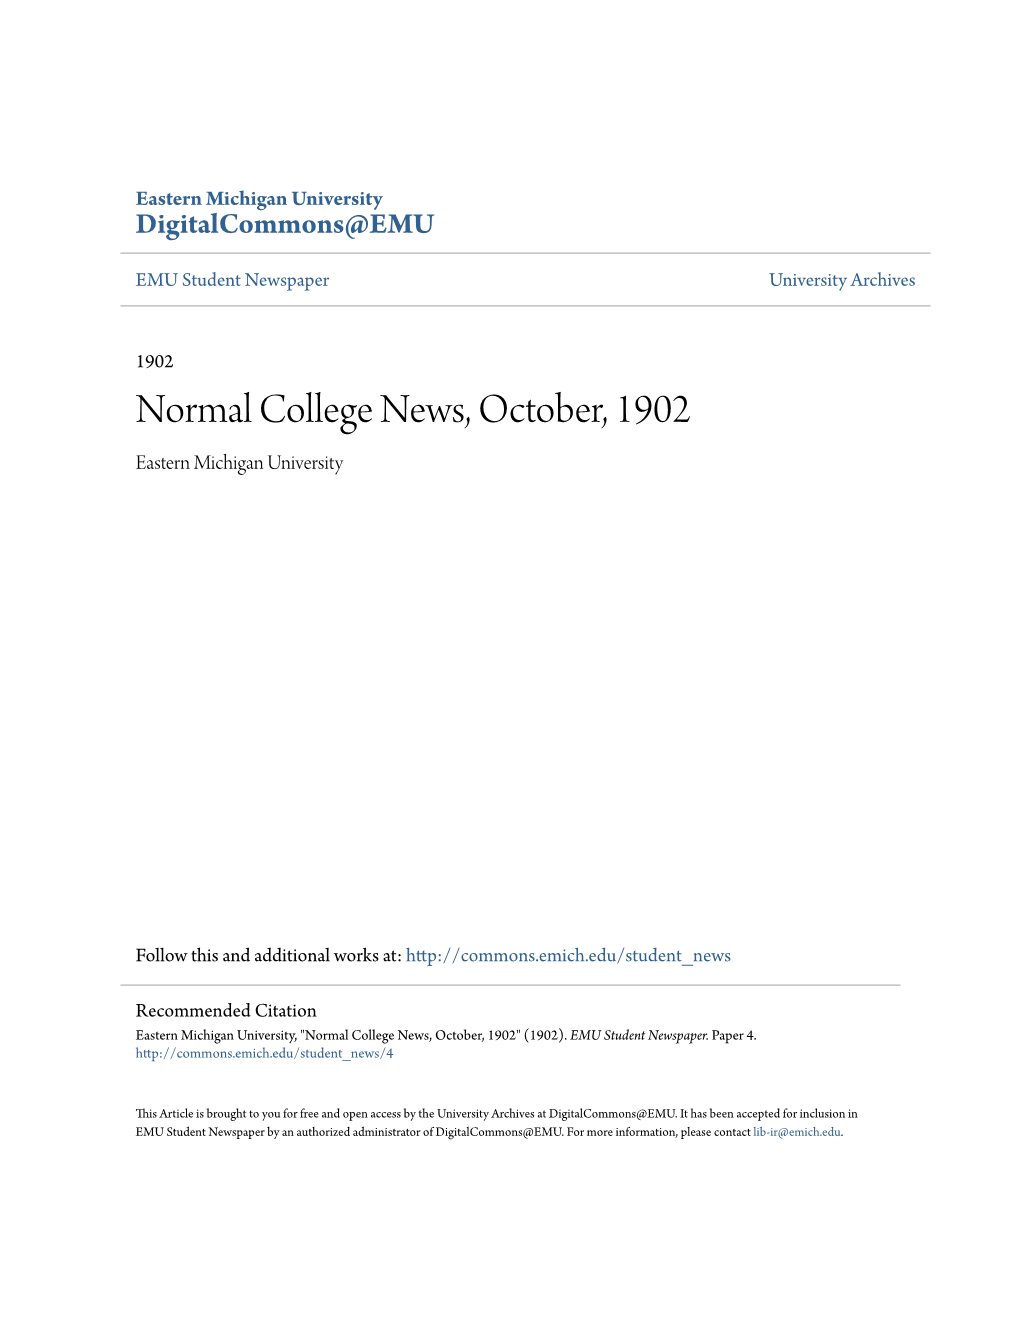 Normal College News, October, 1902 Eastern Michigan University